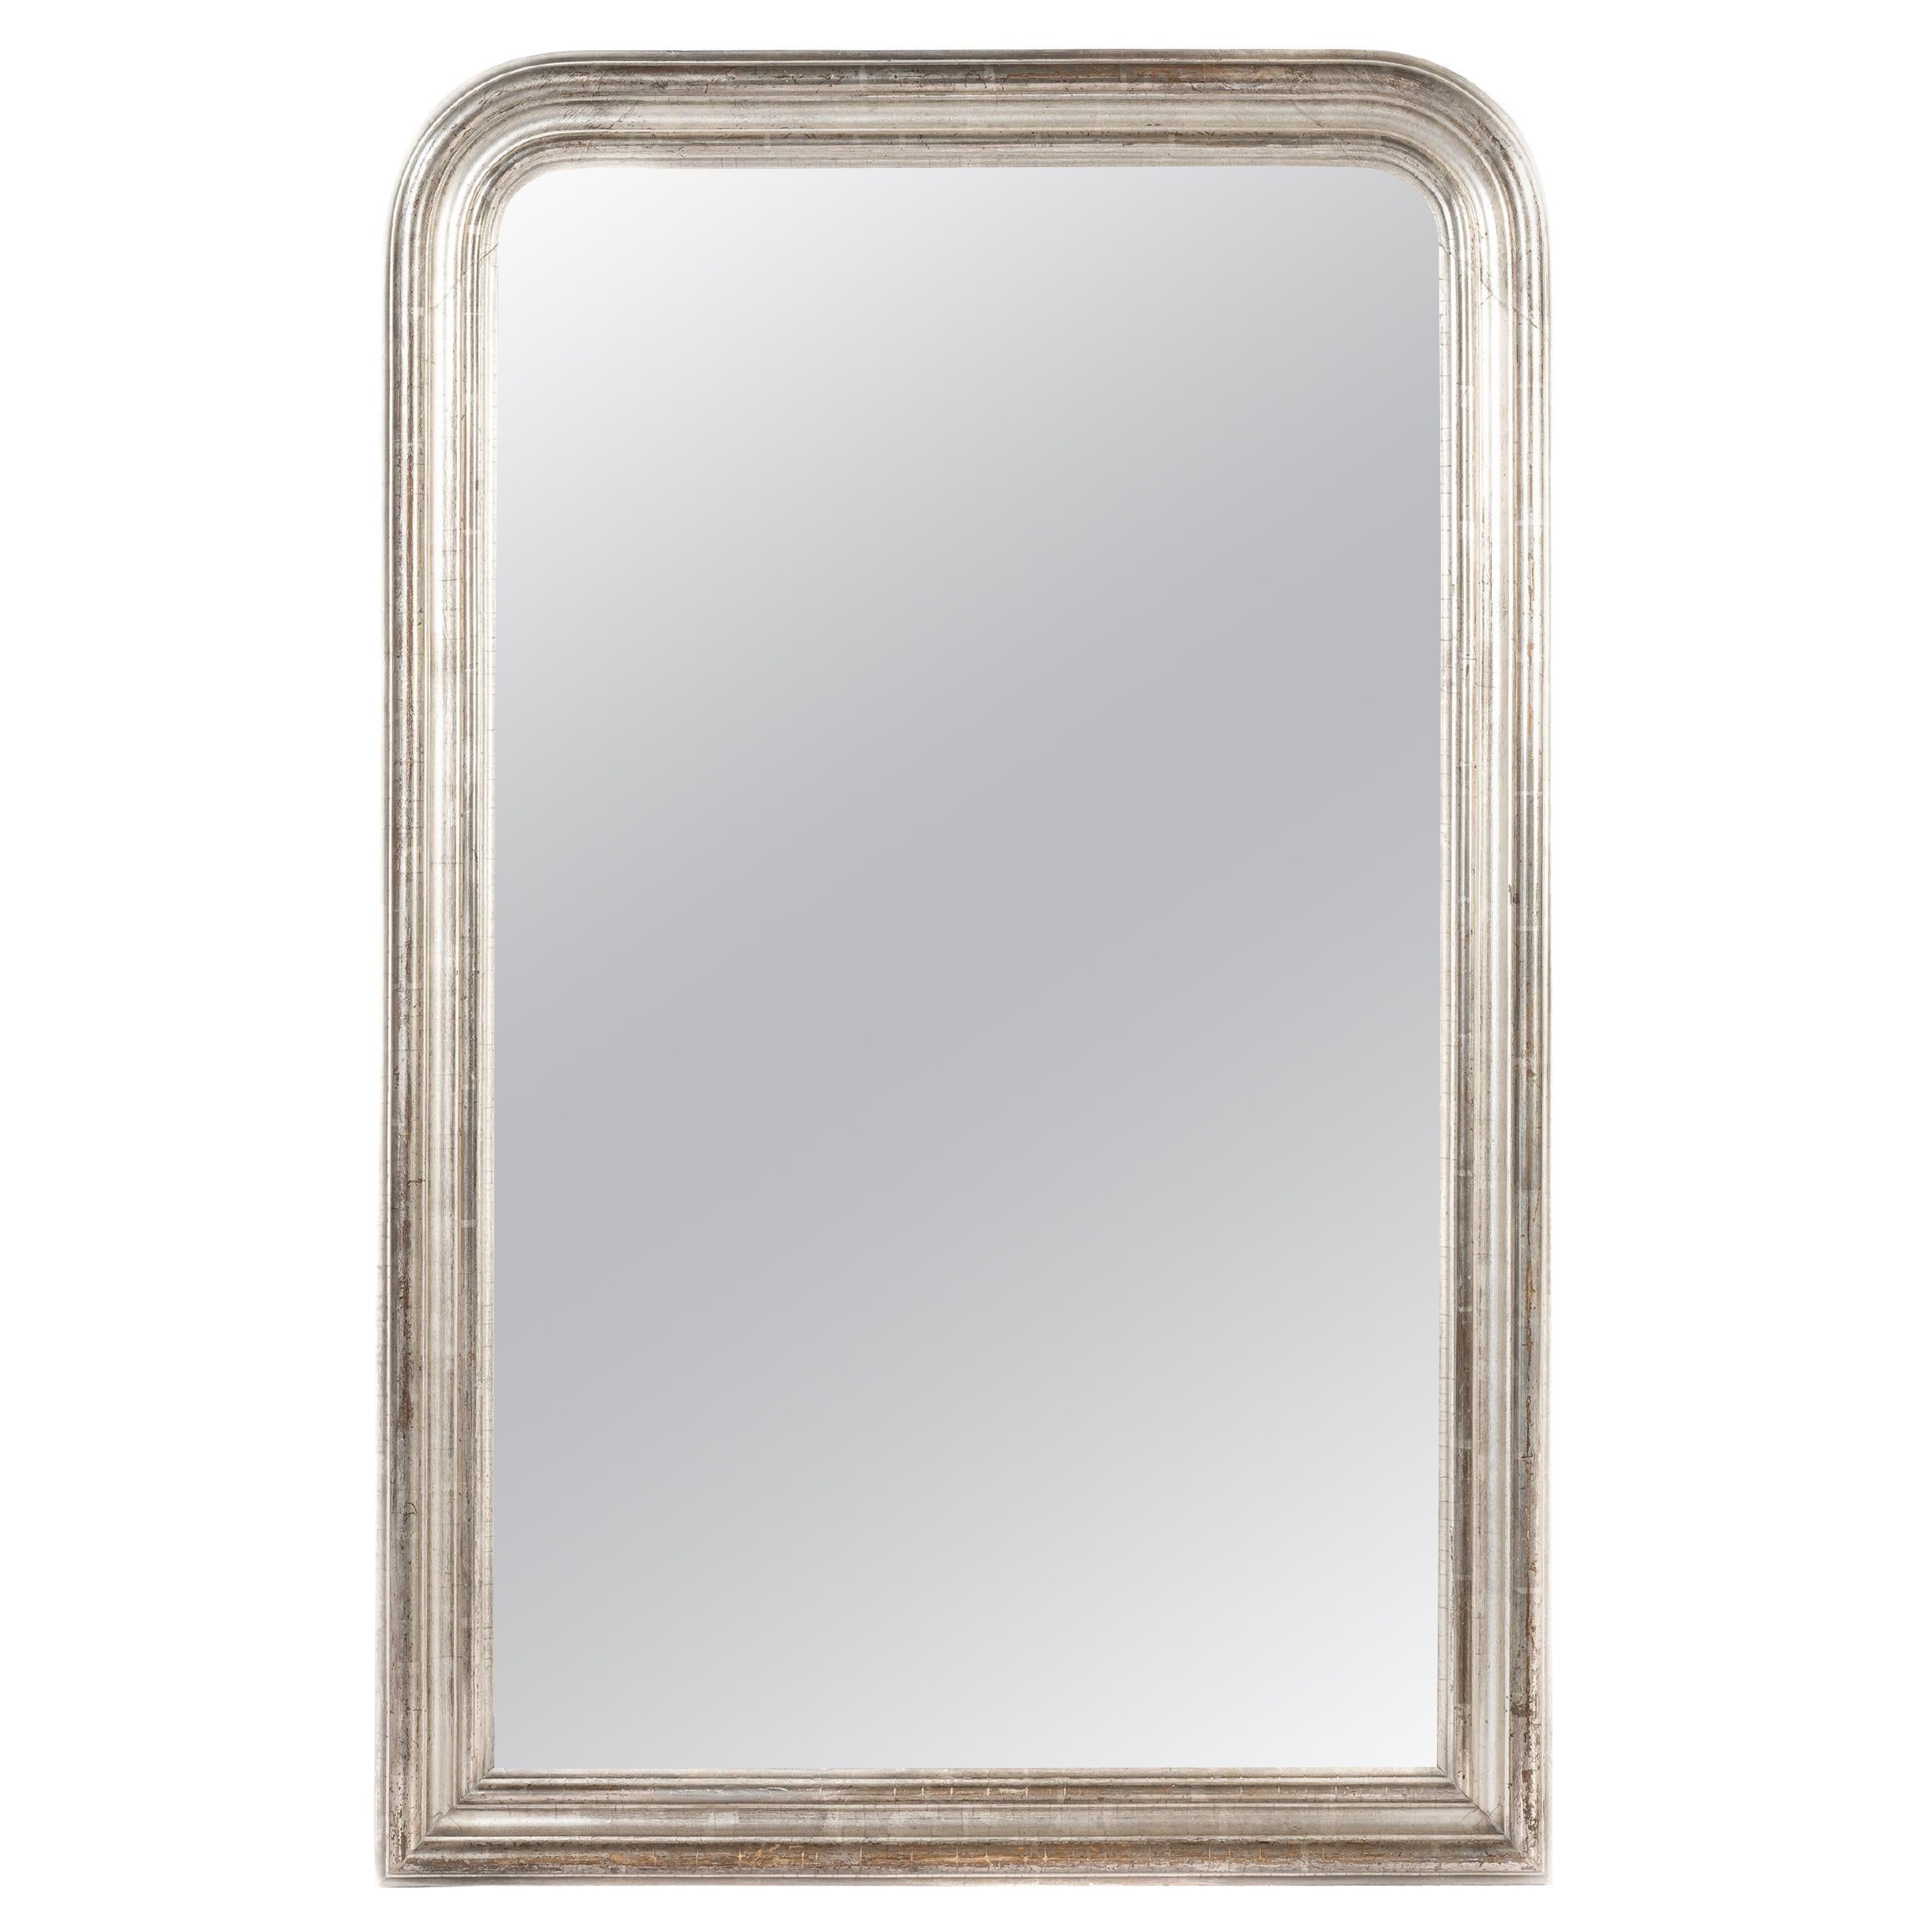 Antique 19th-century elegant silver leaf gilt French Louis Philippe mirror 